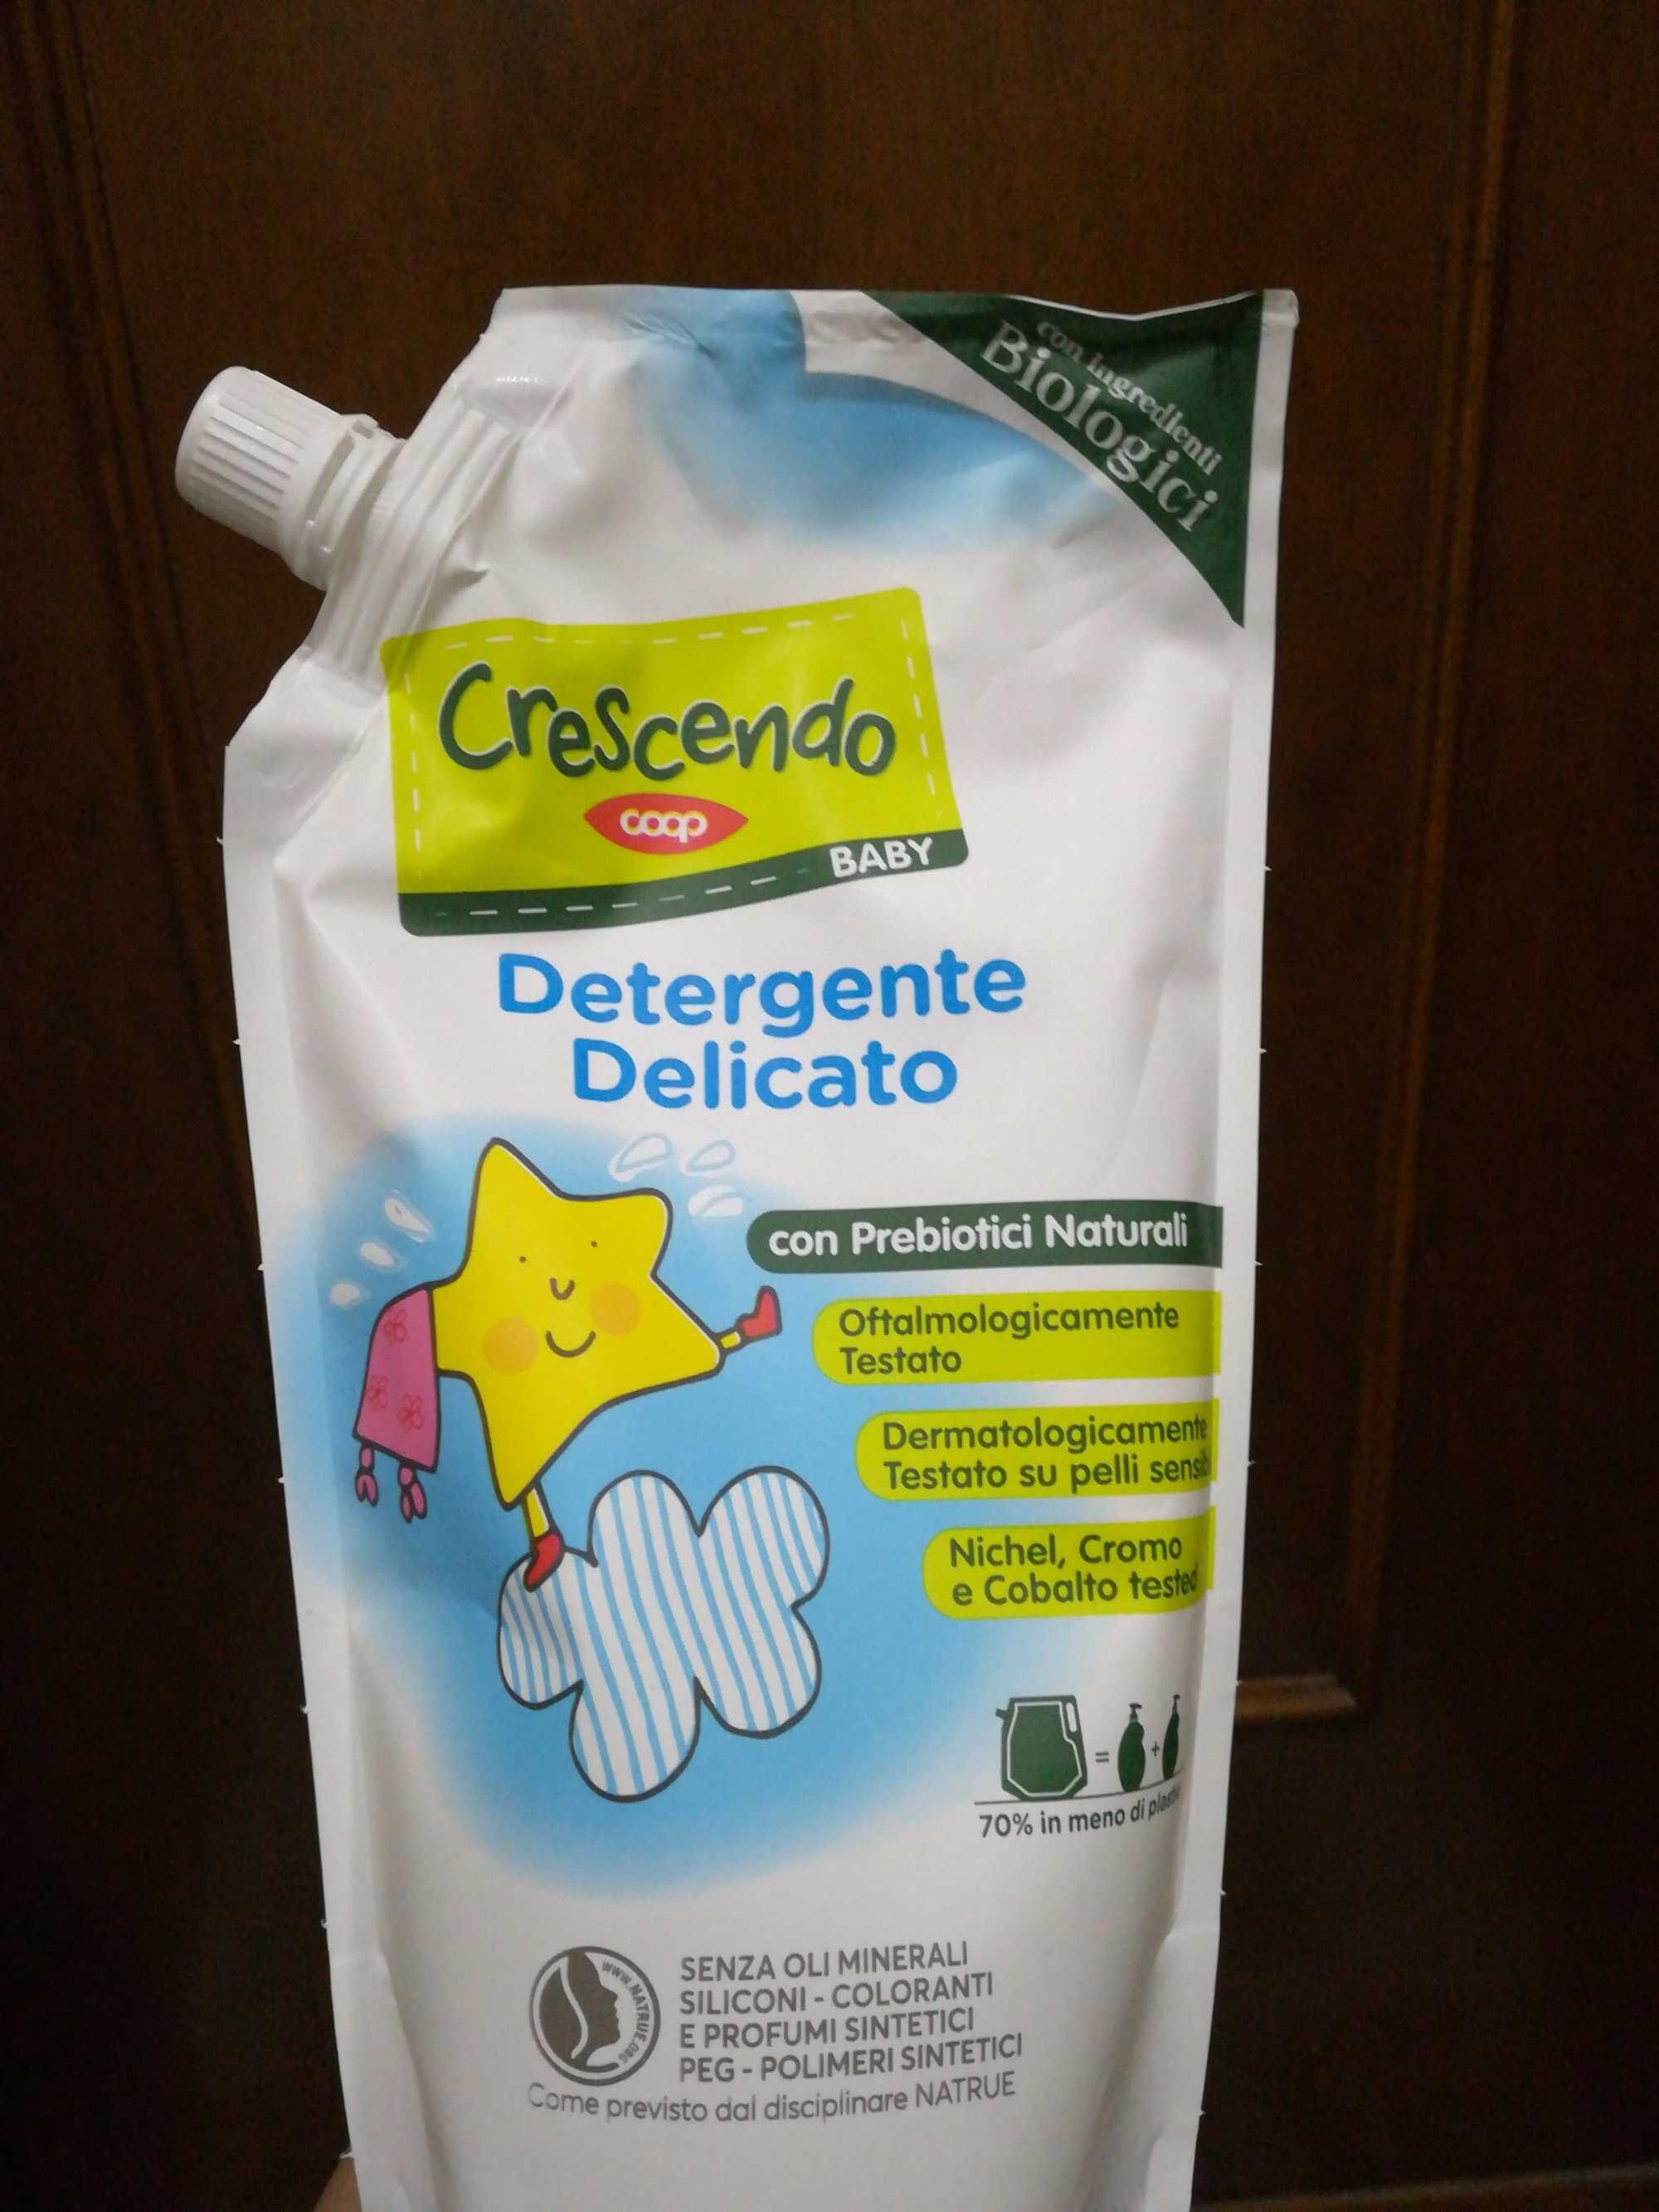 Detergente Delicato - Product - it